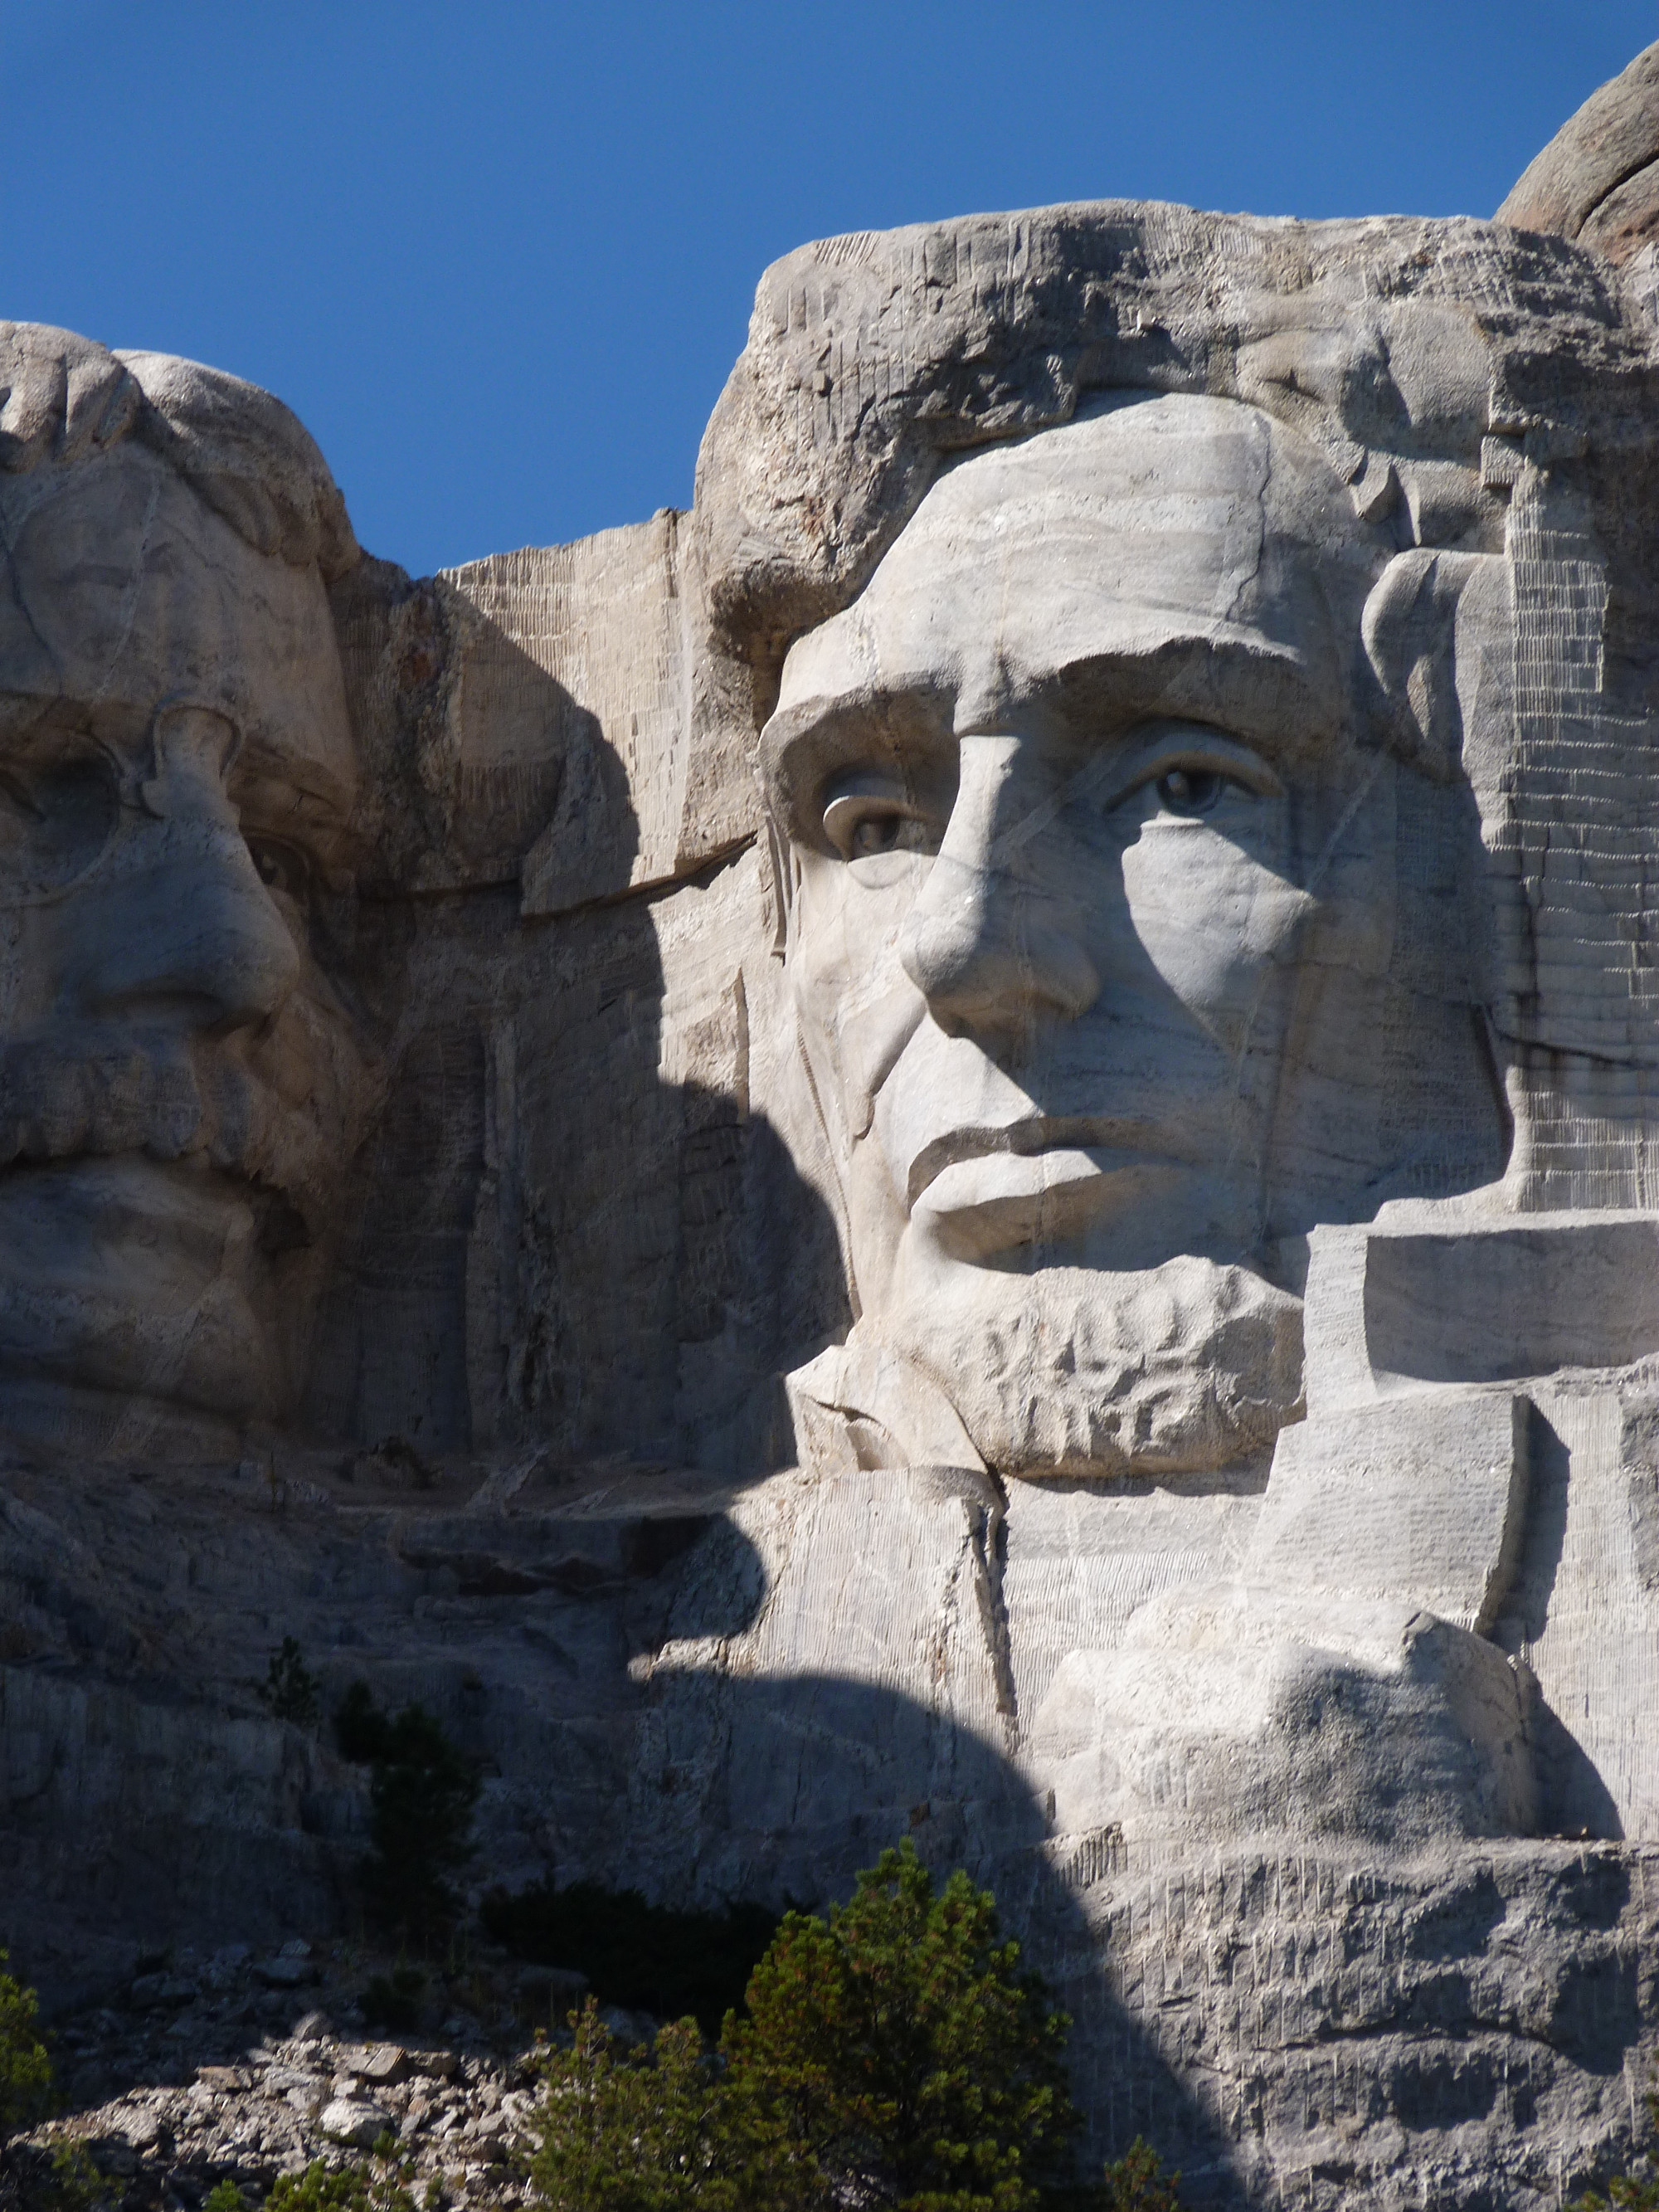 Mount Rushmore, United States